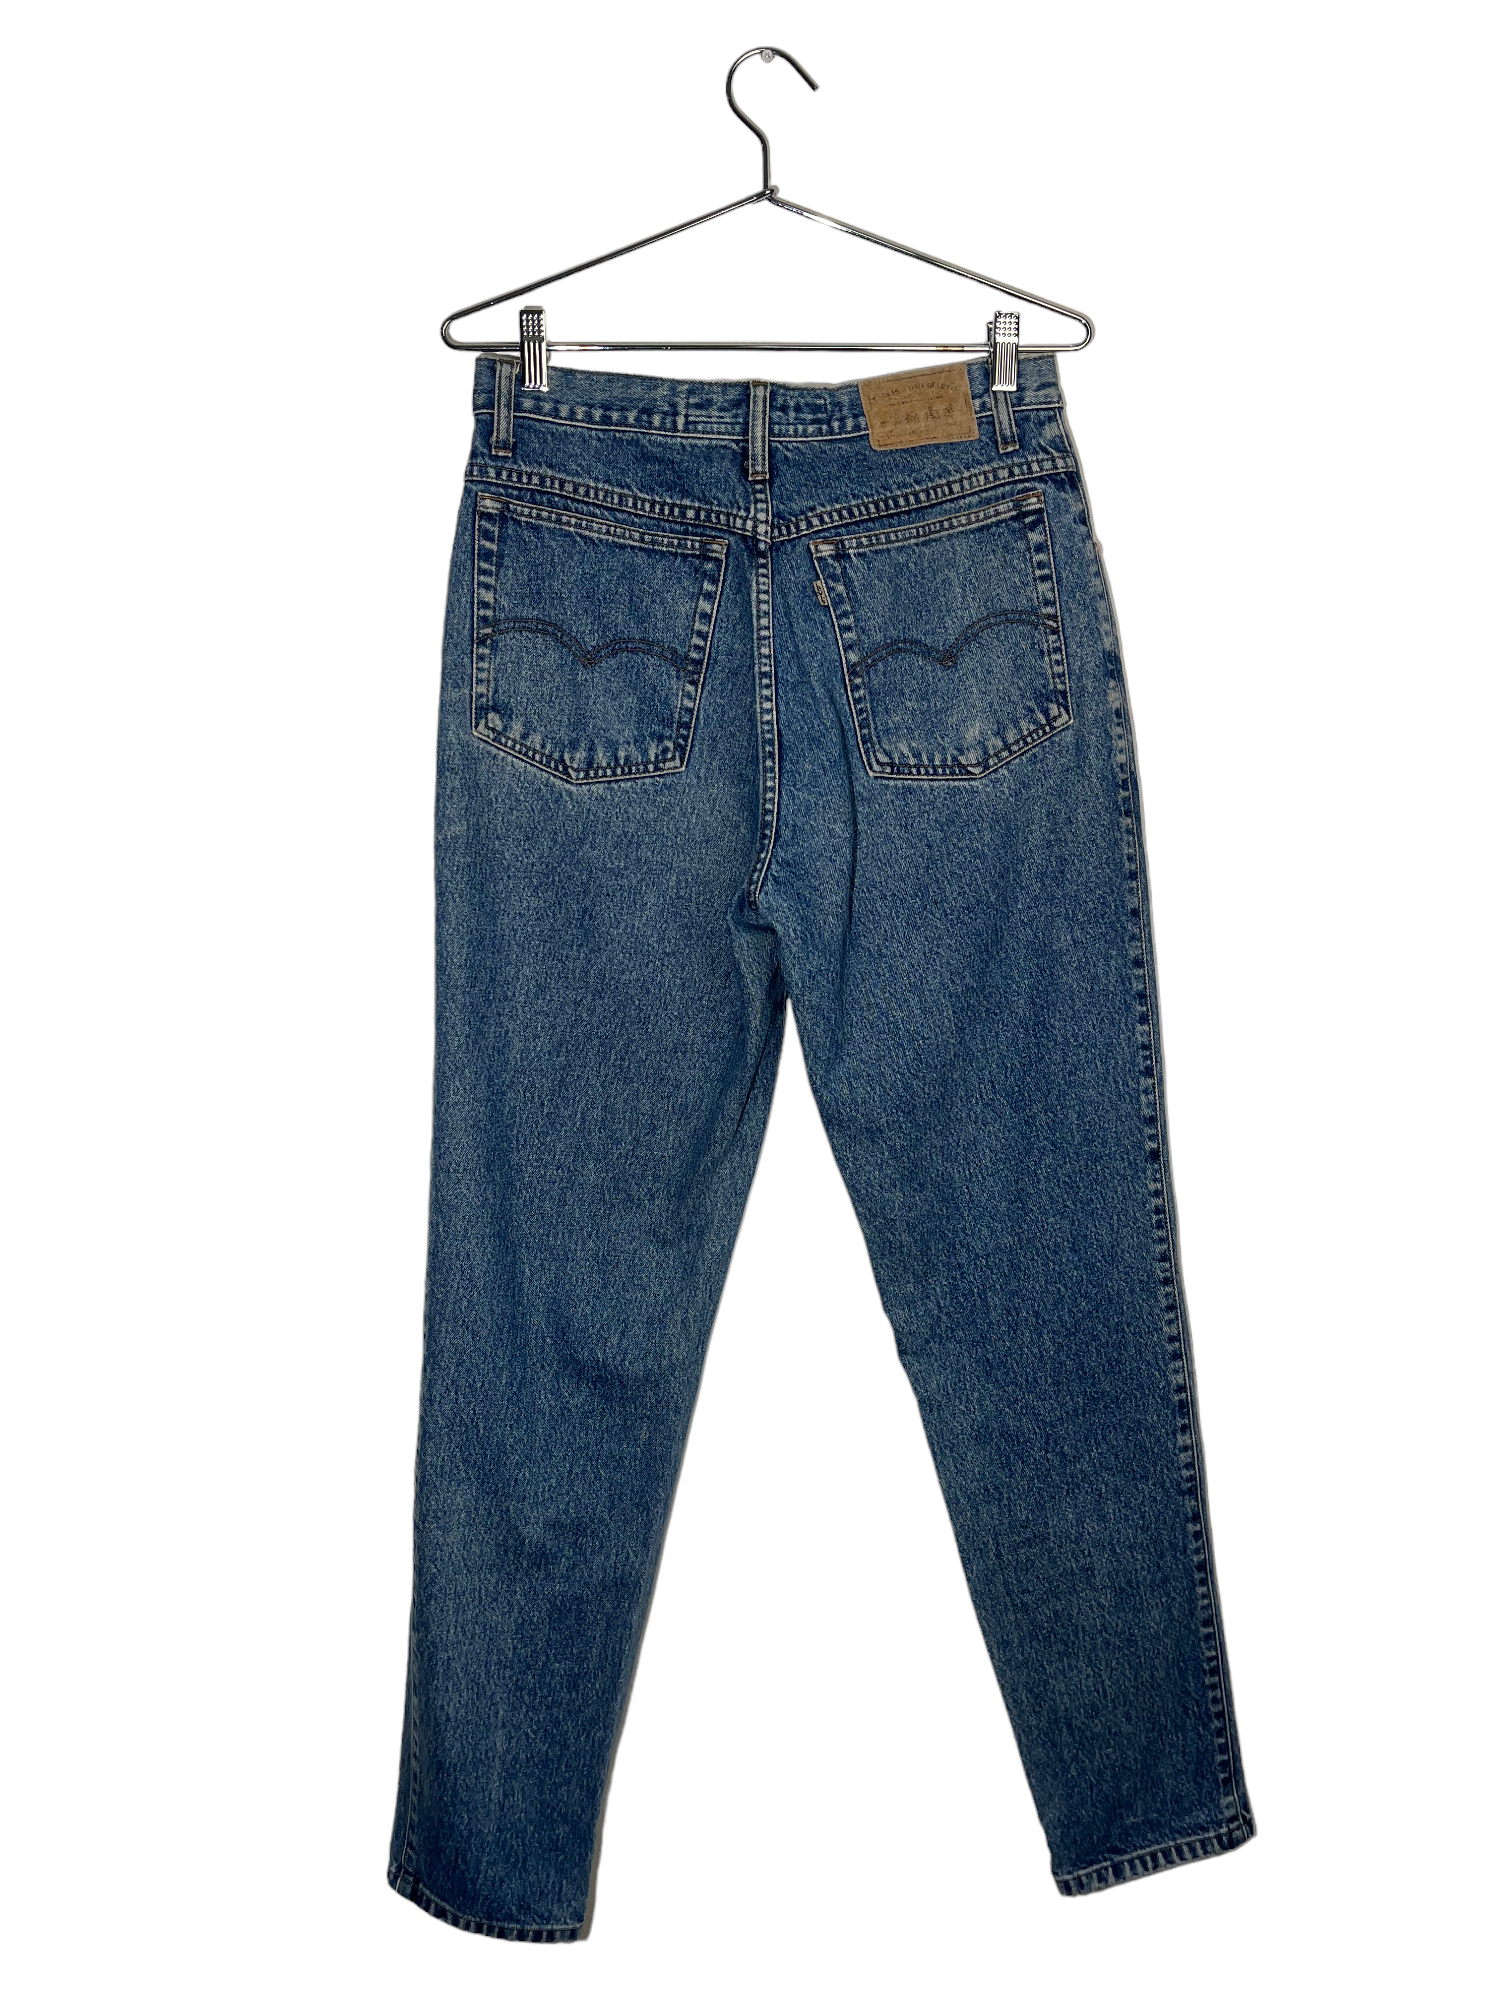 Vintage Levi's High Waisted Medium Wash Jeans